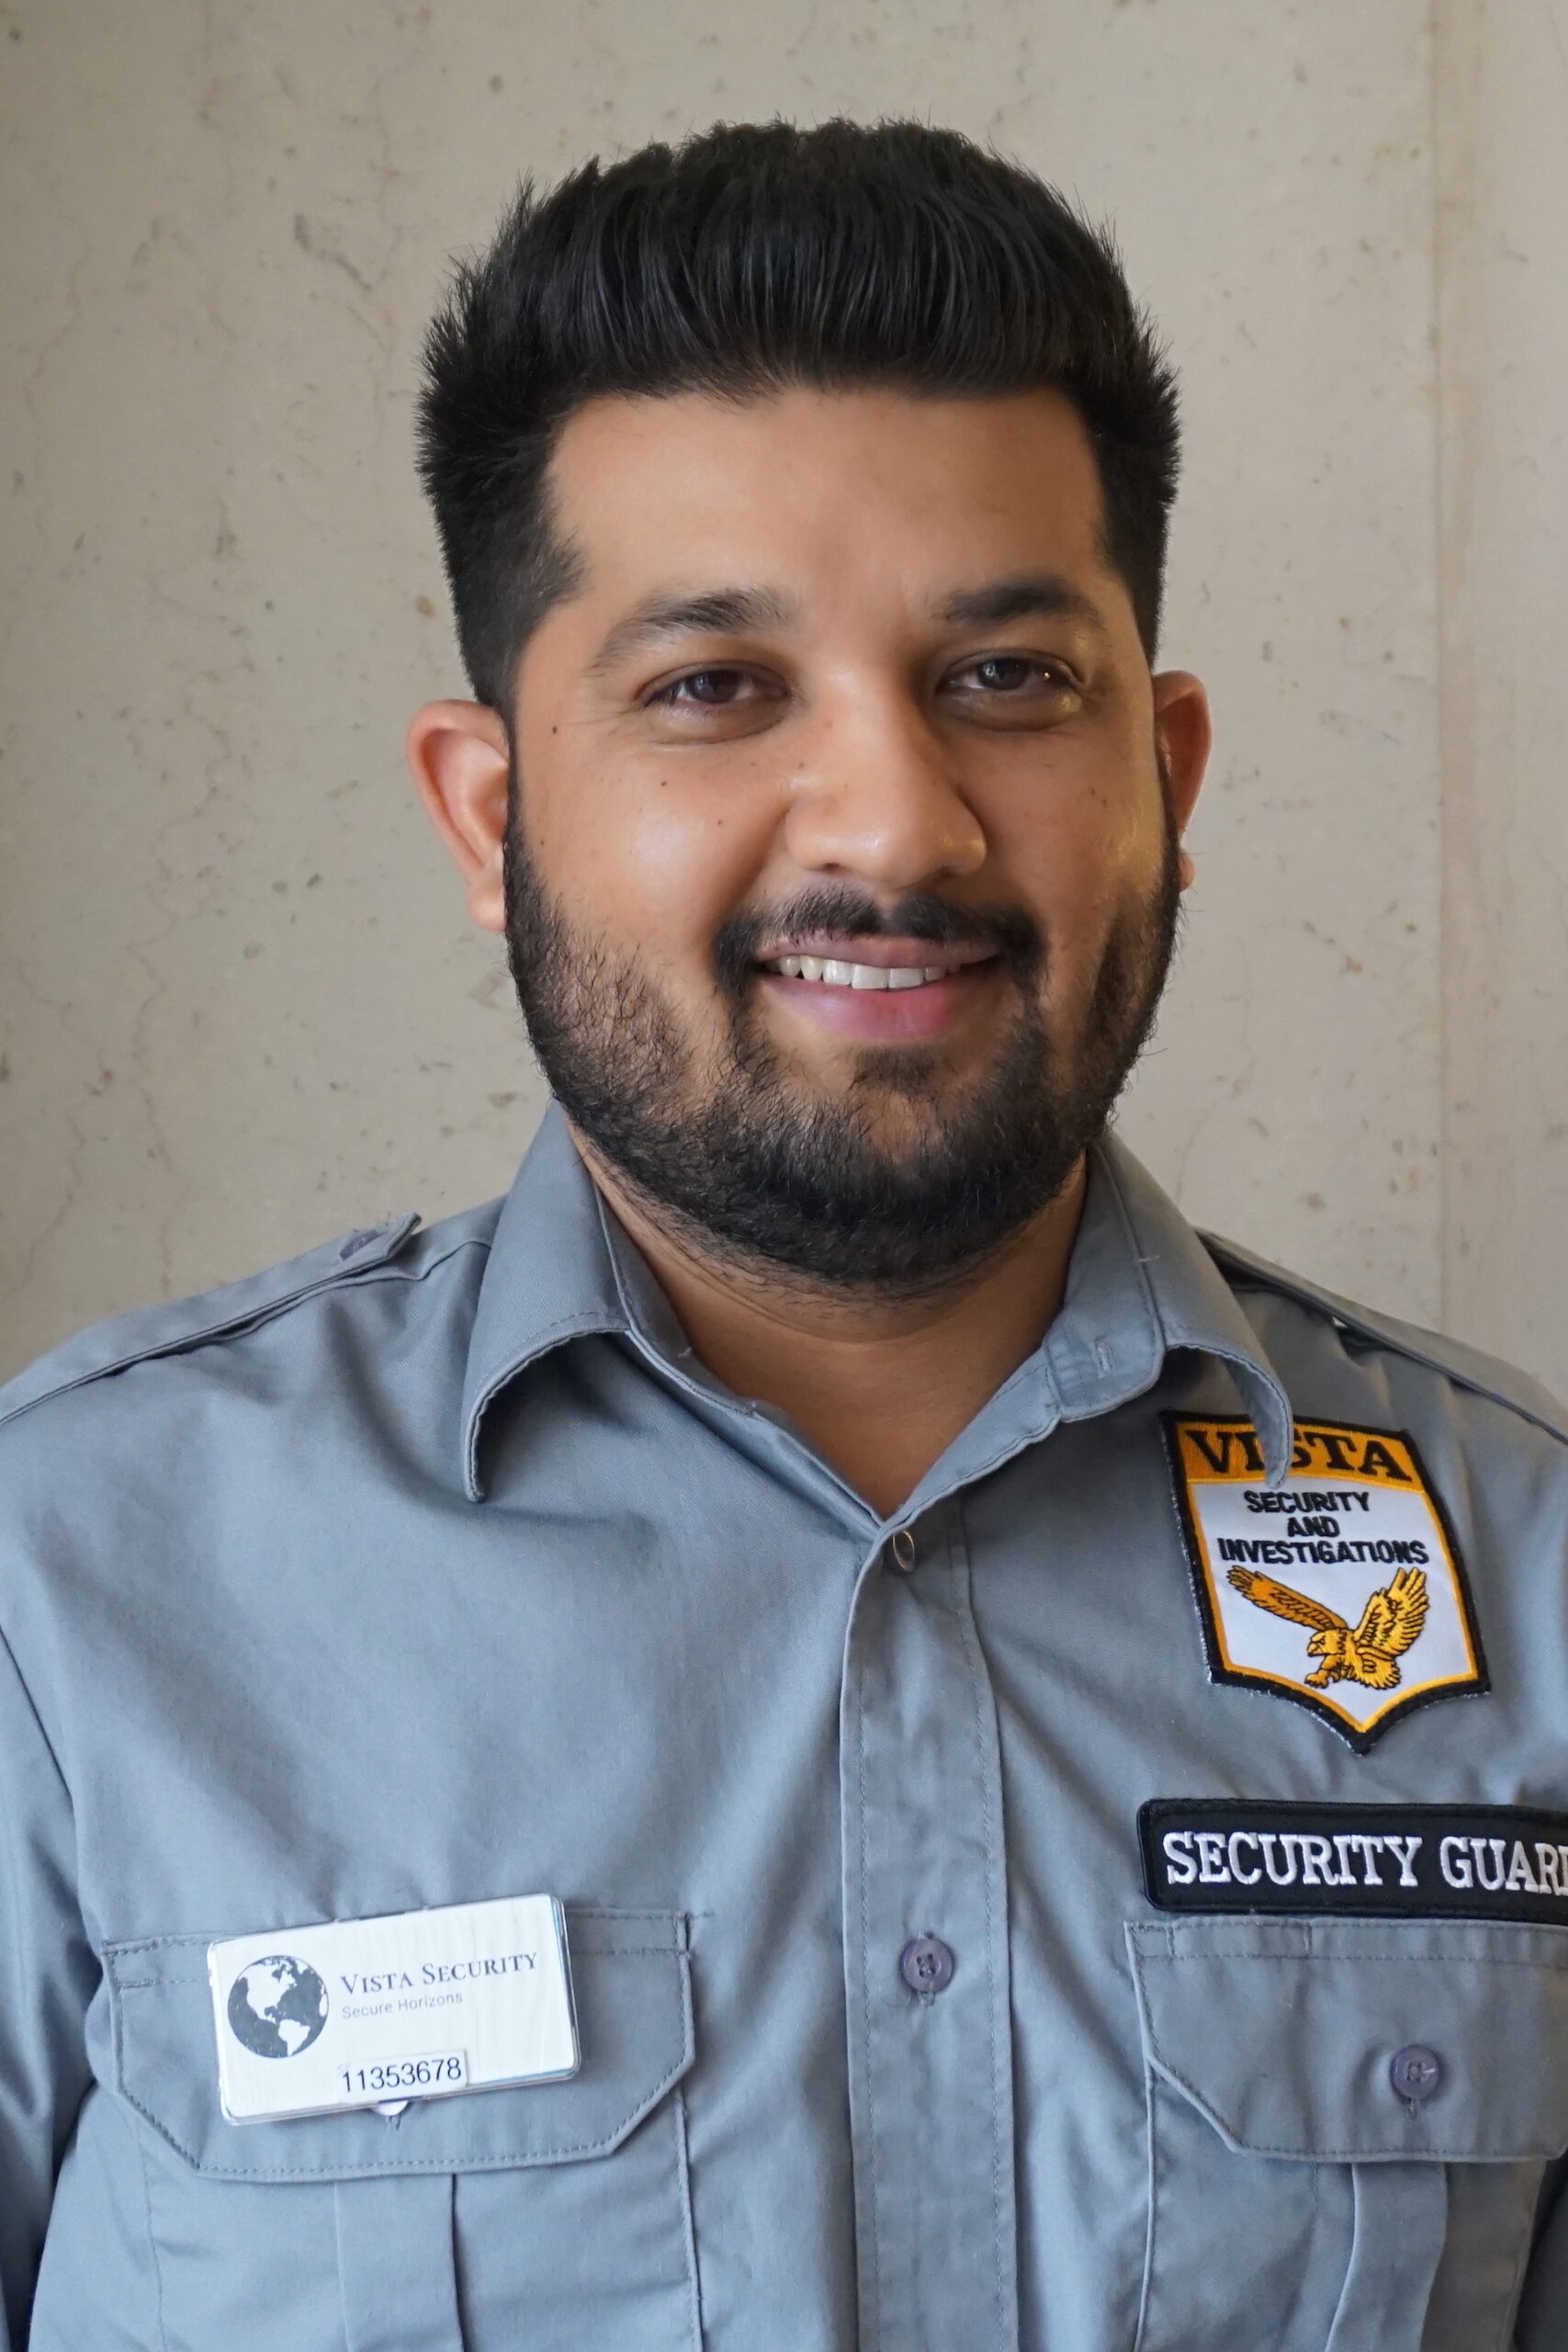 Vista featured employee Akshat standing in front of a window in uniform.